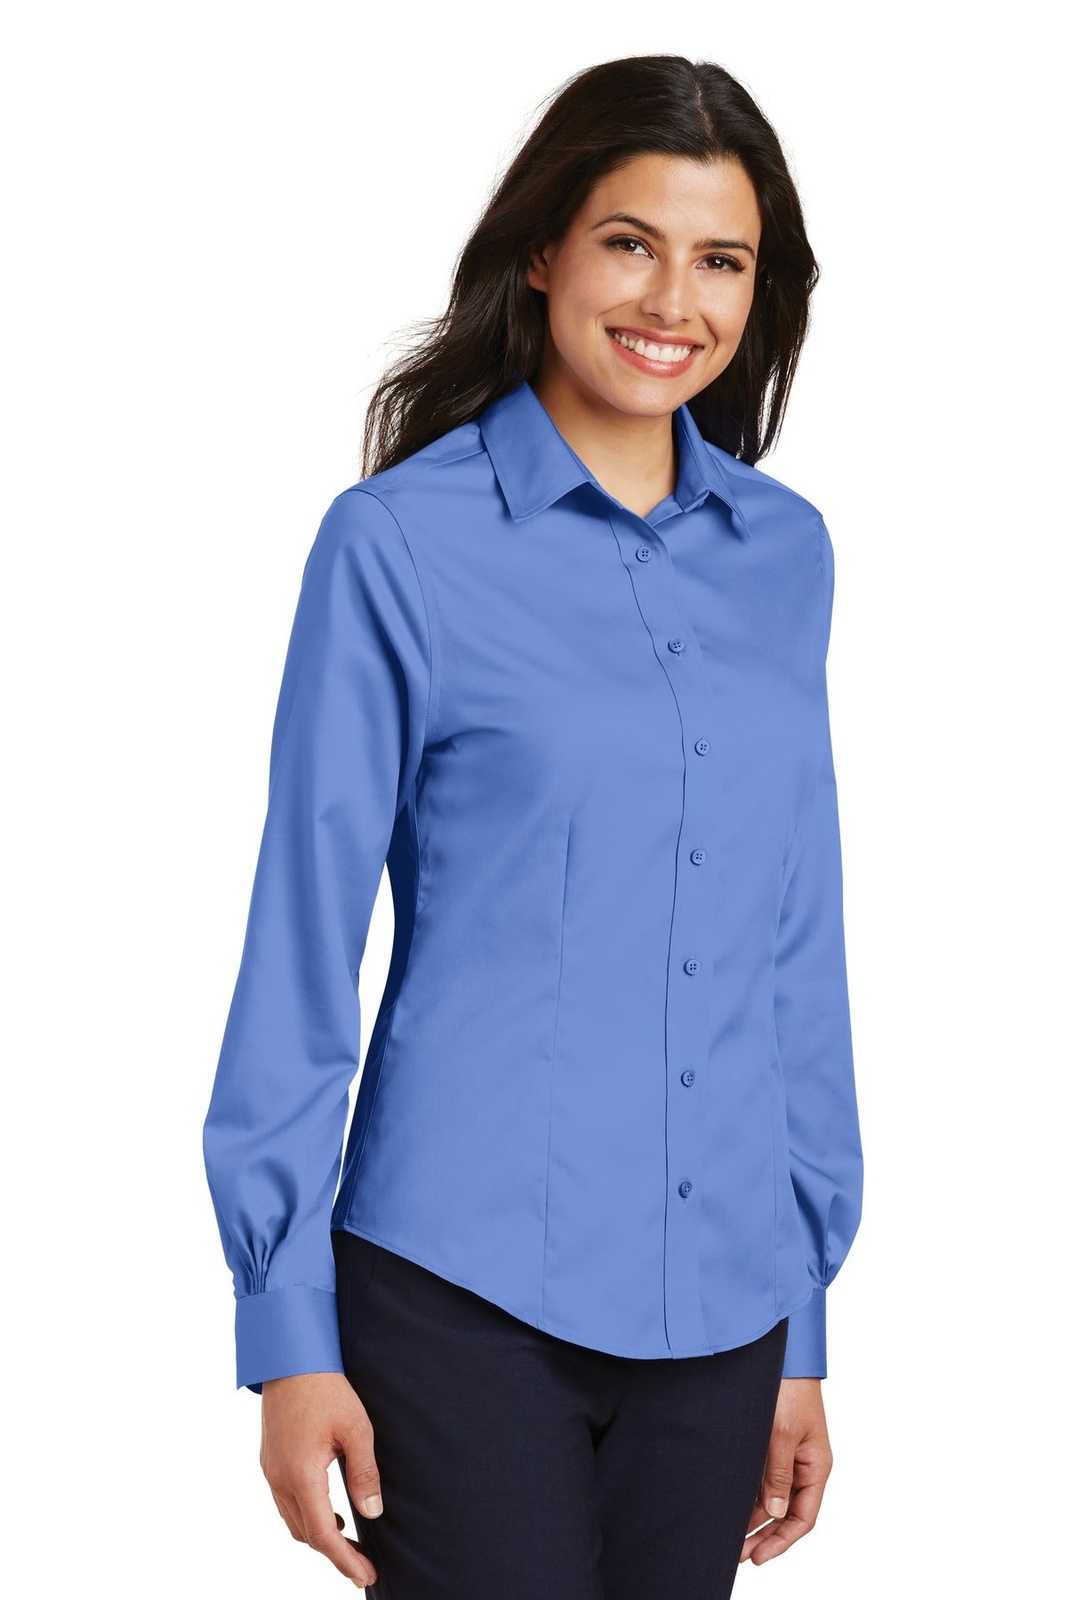 Port Authority L638 Ladies Non-Iron Twill Shirt - Ultramarine Blue - HIT a Double - 4